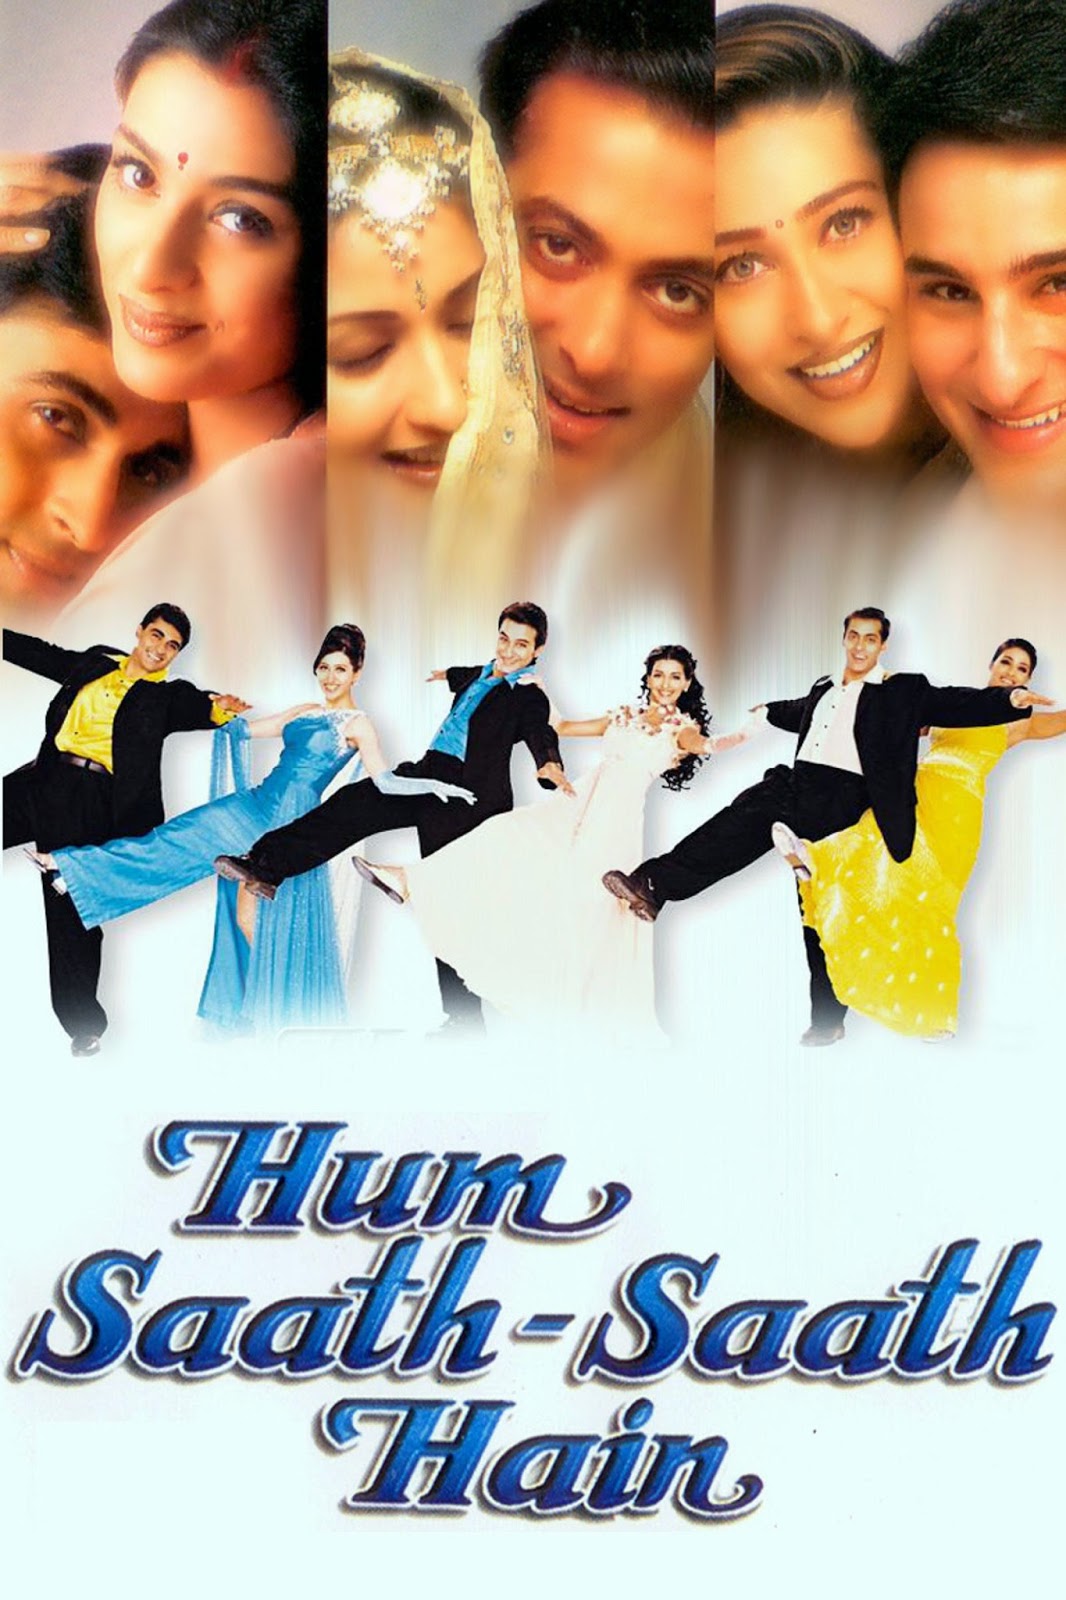 hum sath sath hai full movie hd 1080p hindi download